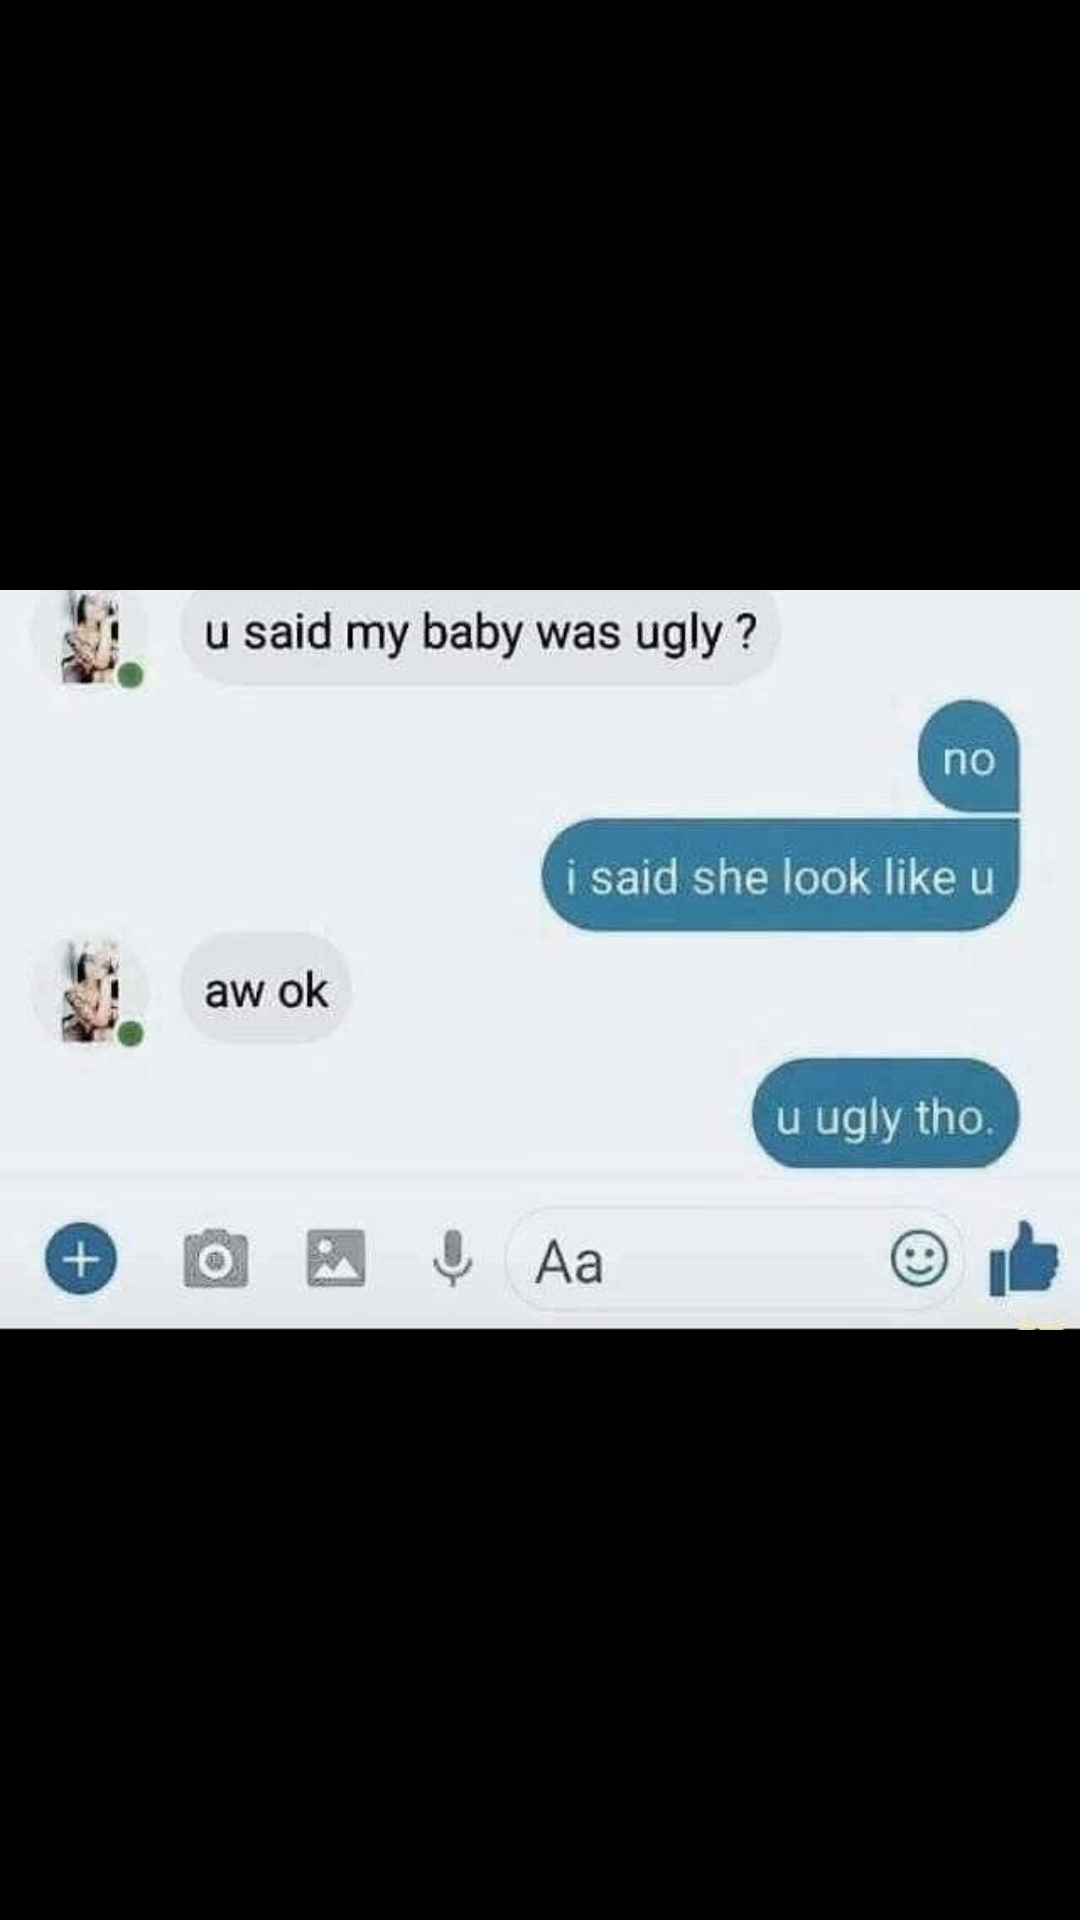 You saying my baby is ugly?